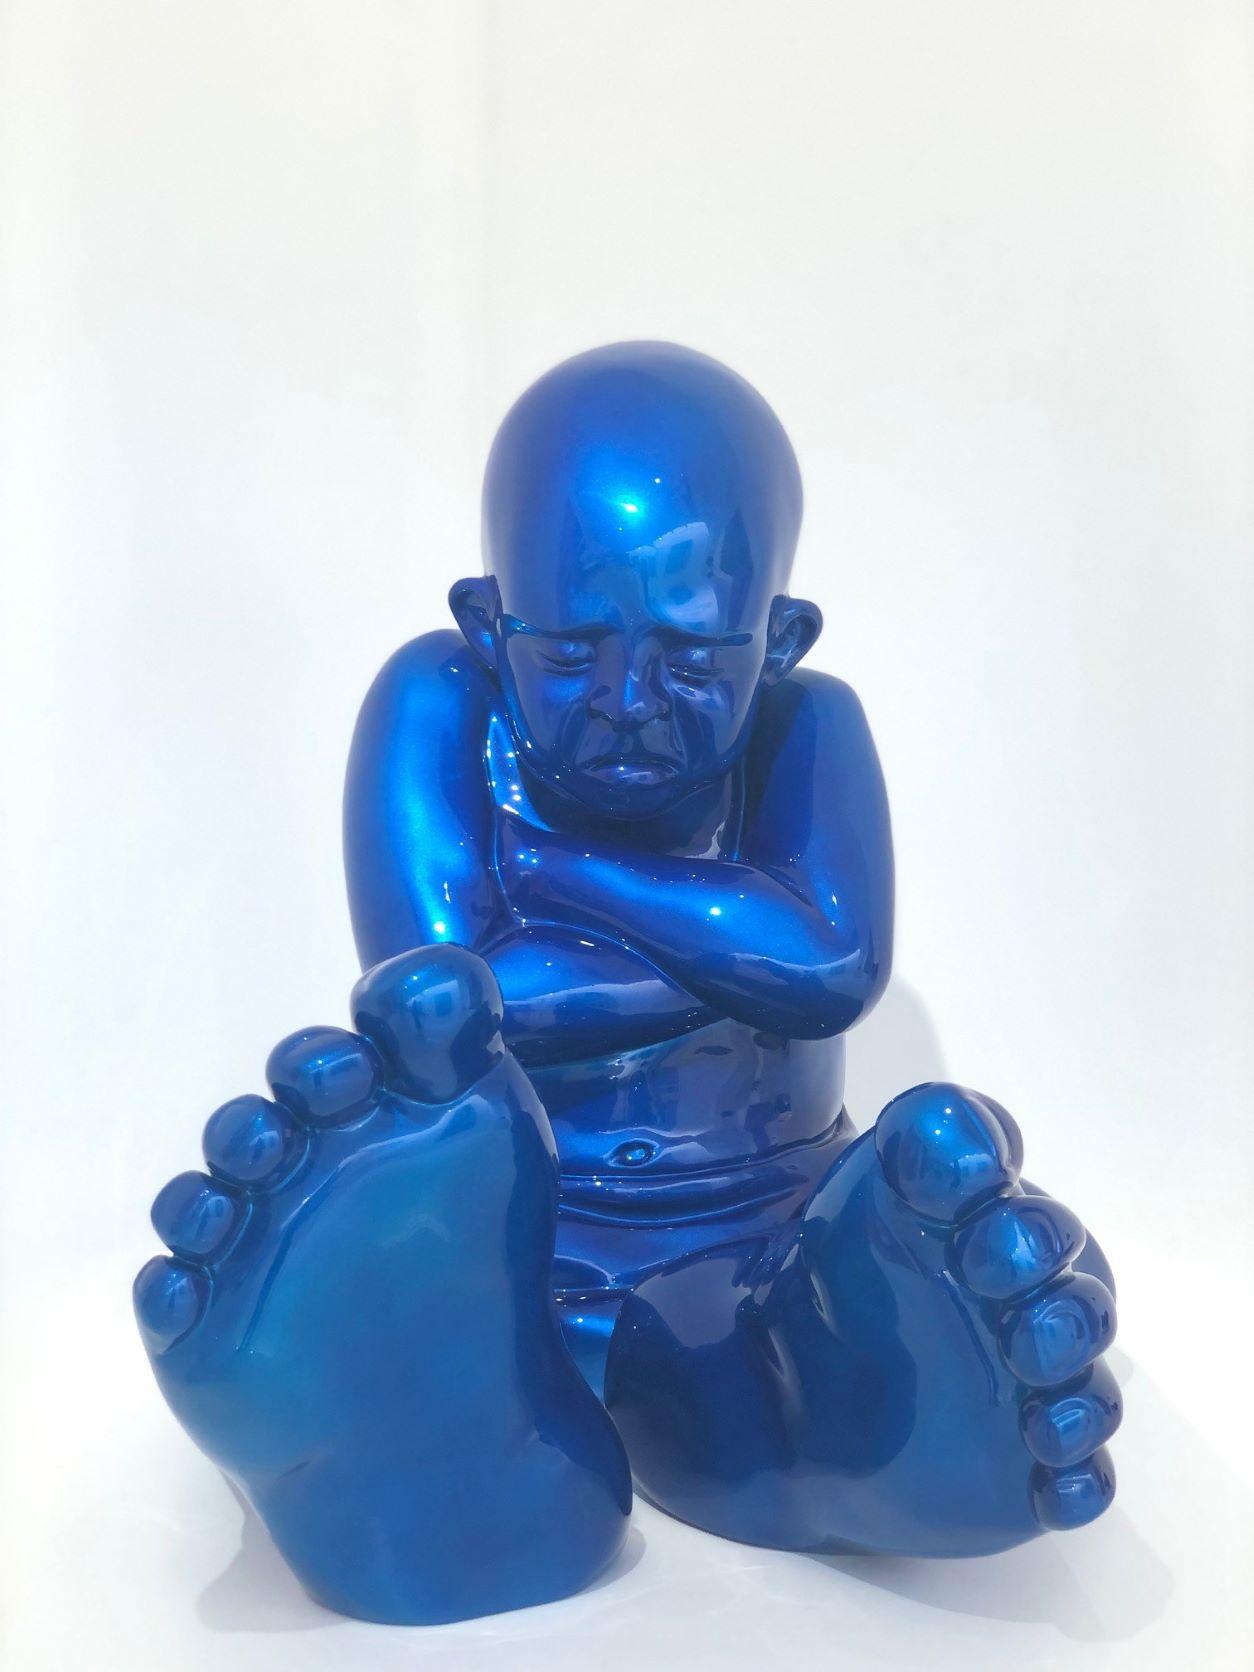 Idan Zareski Figurative Sculpture - Babyfoot 85 - Resin Sculpture, 2020